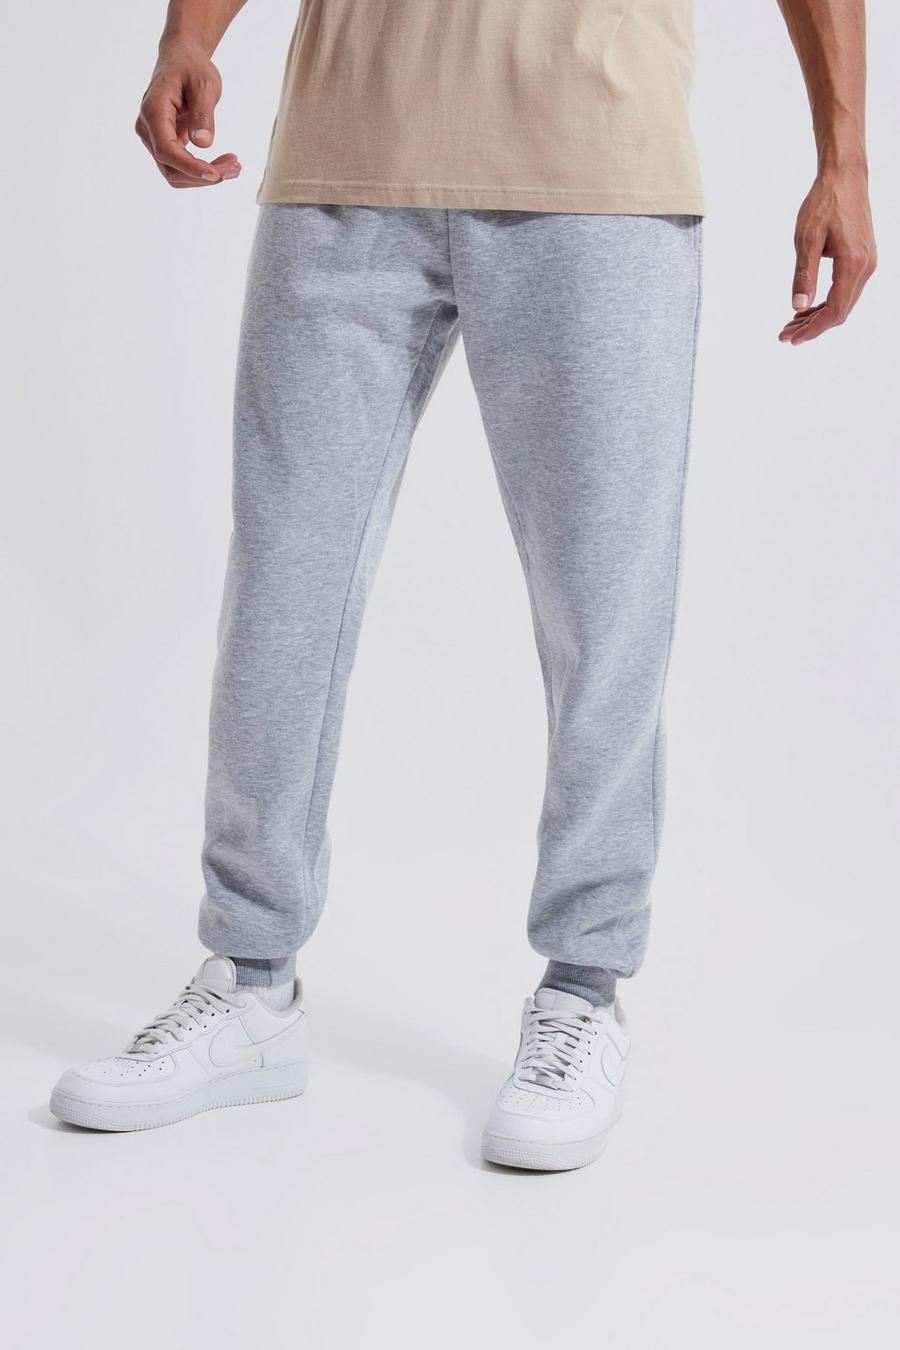 Pantalón deportivo Tall básico Regular, Grey marl grigio